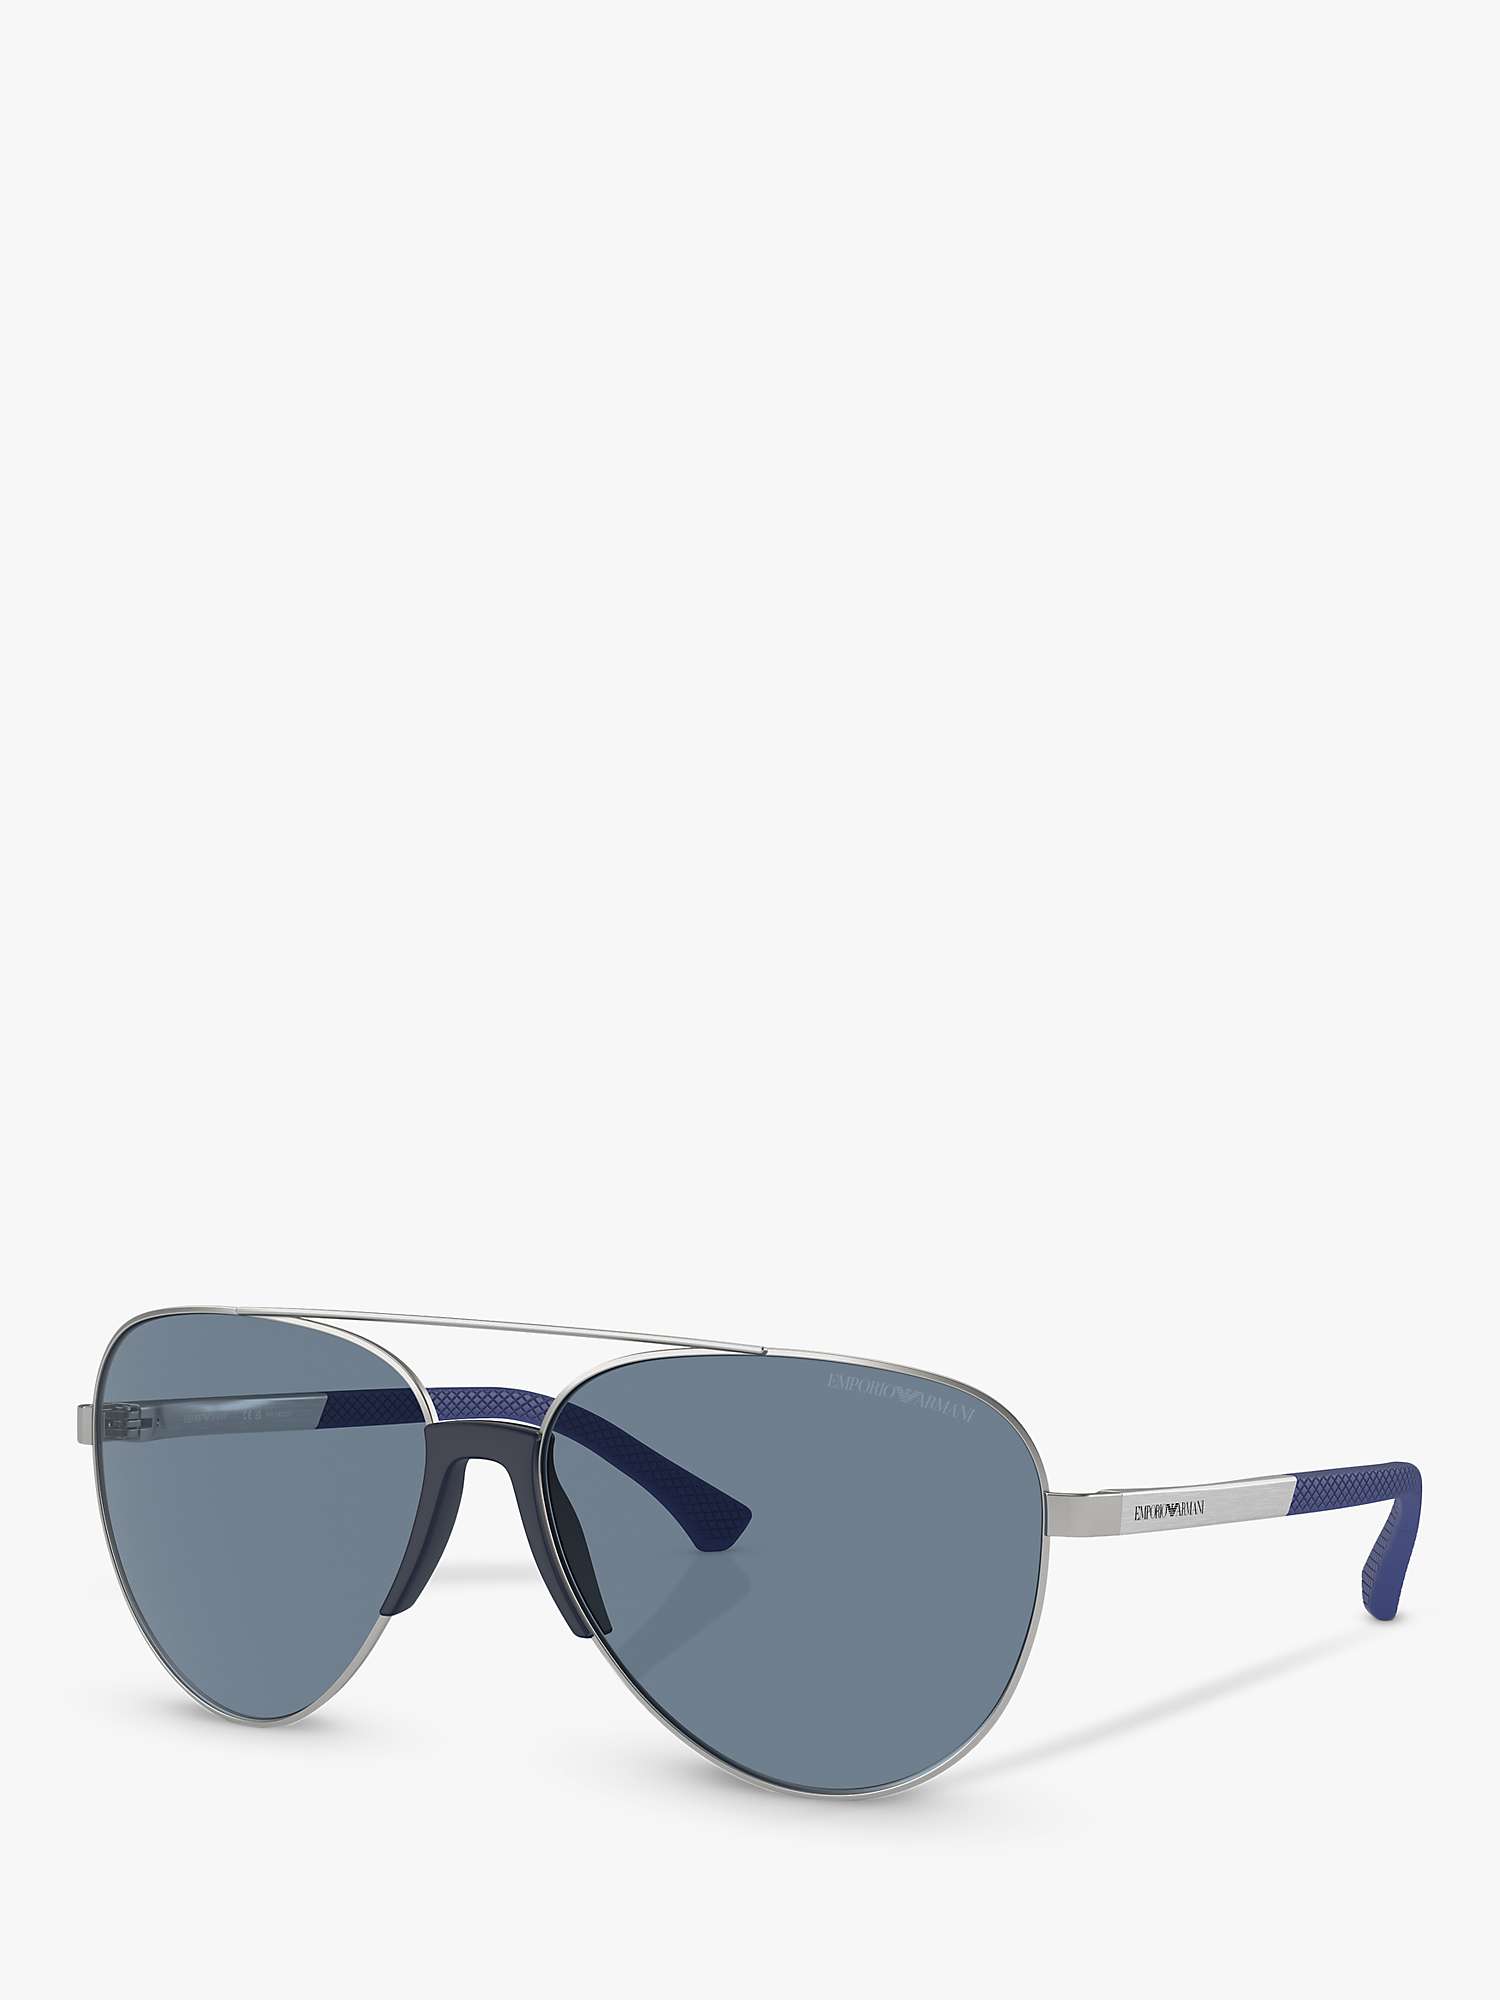 Buy Emporio Armani EA2059 Men's Polarised Aviator Sunglasses, Matte Silver/Blue Online at johnlewis.com